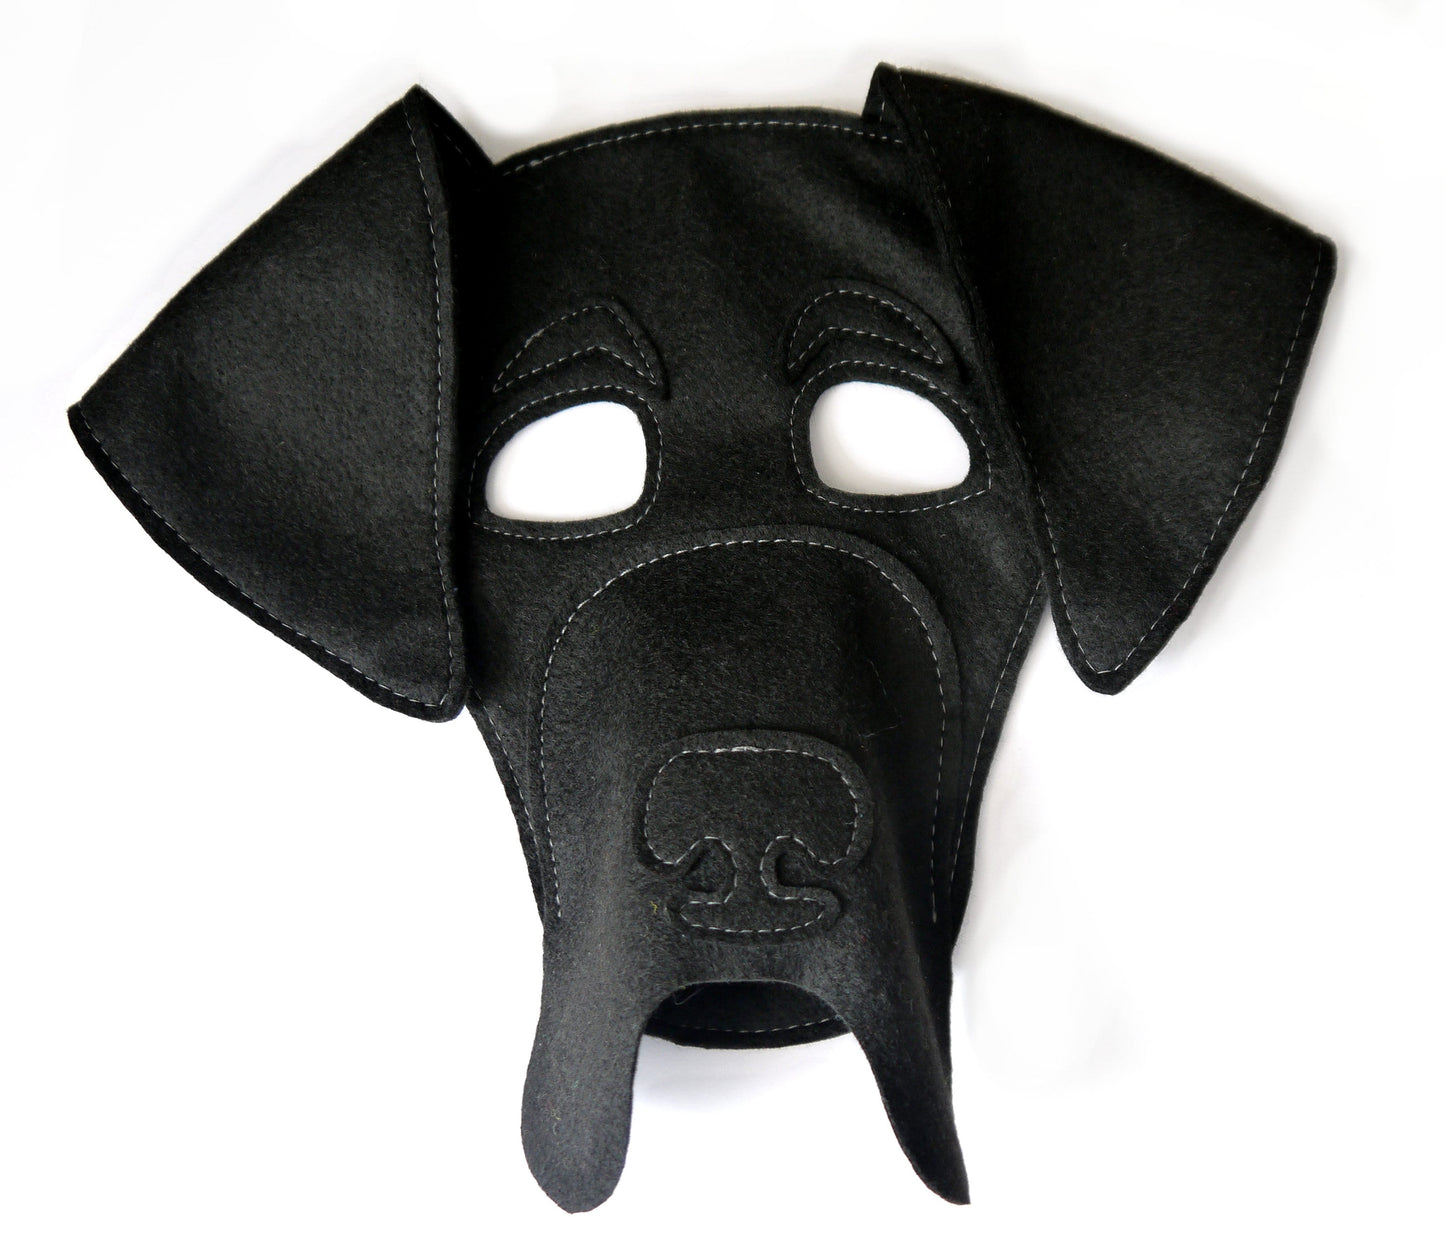 Great Dane costume mask